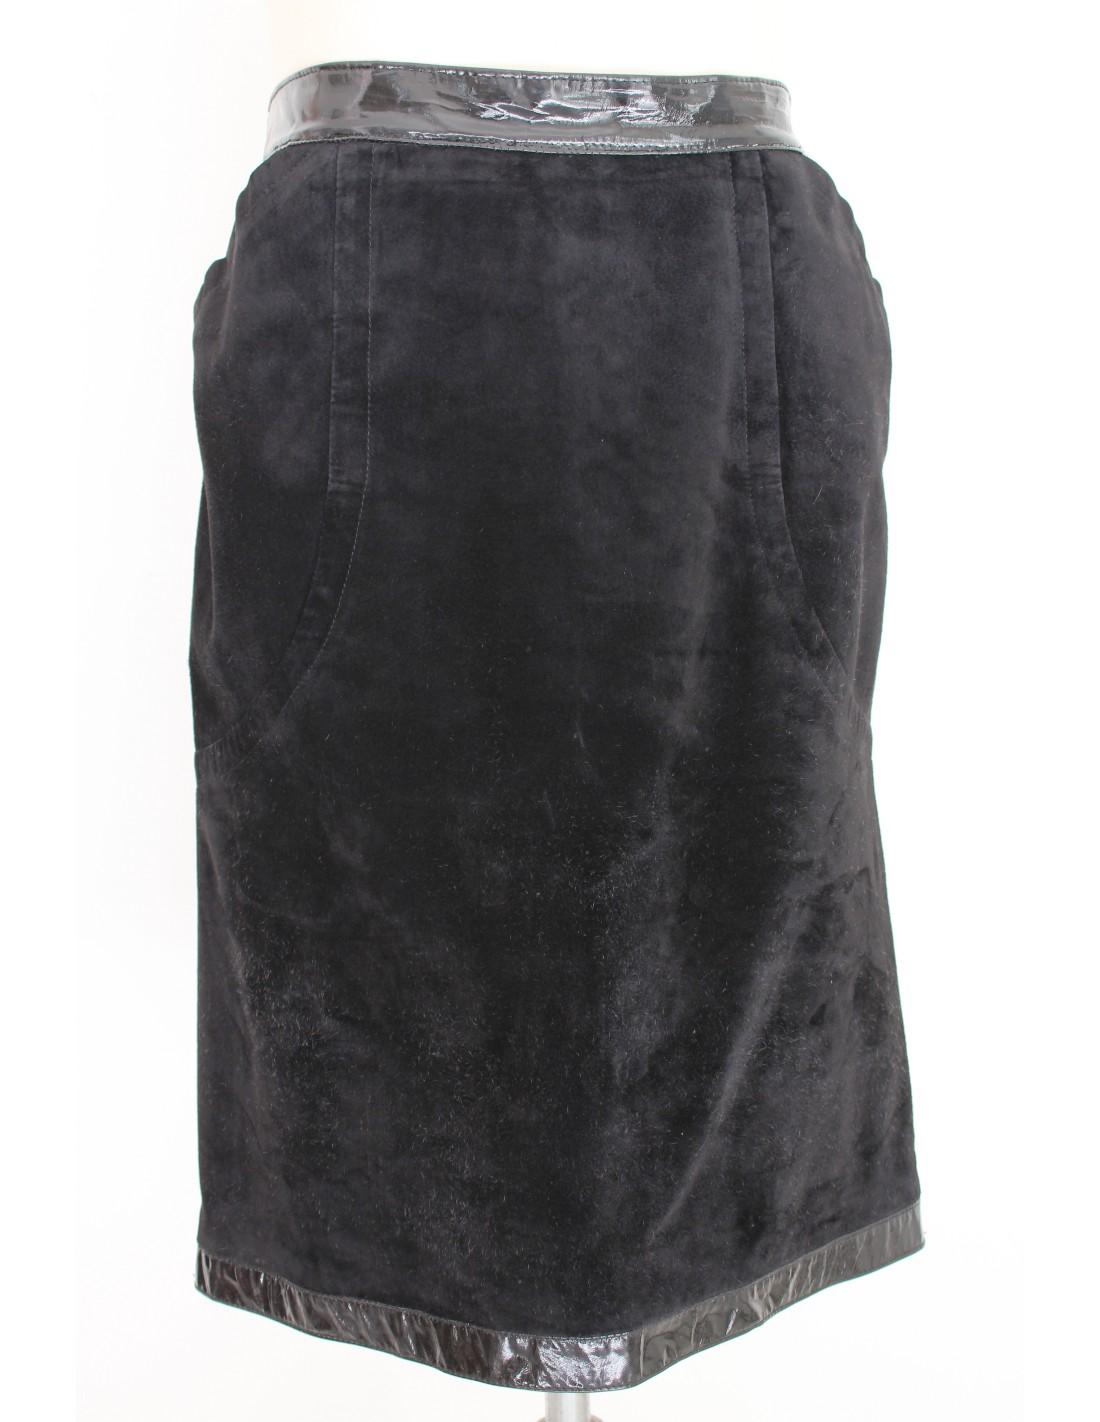 Christian Dior Boutique Black Suede Skirt Suit 1980s 3